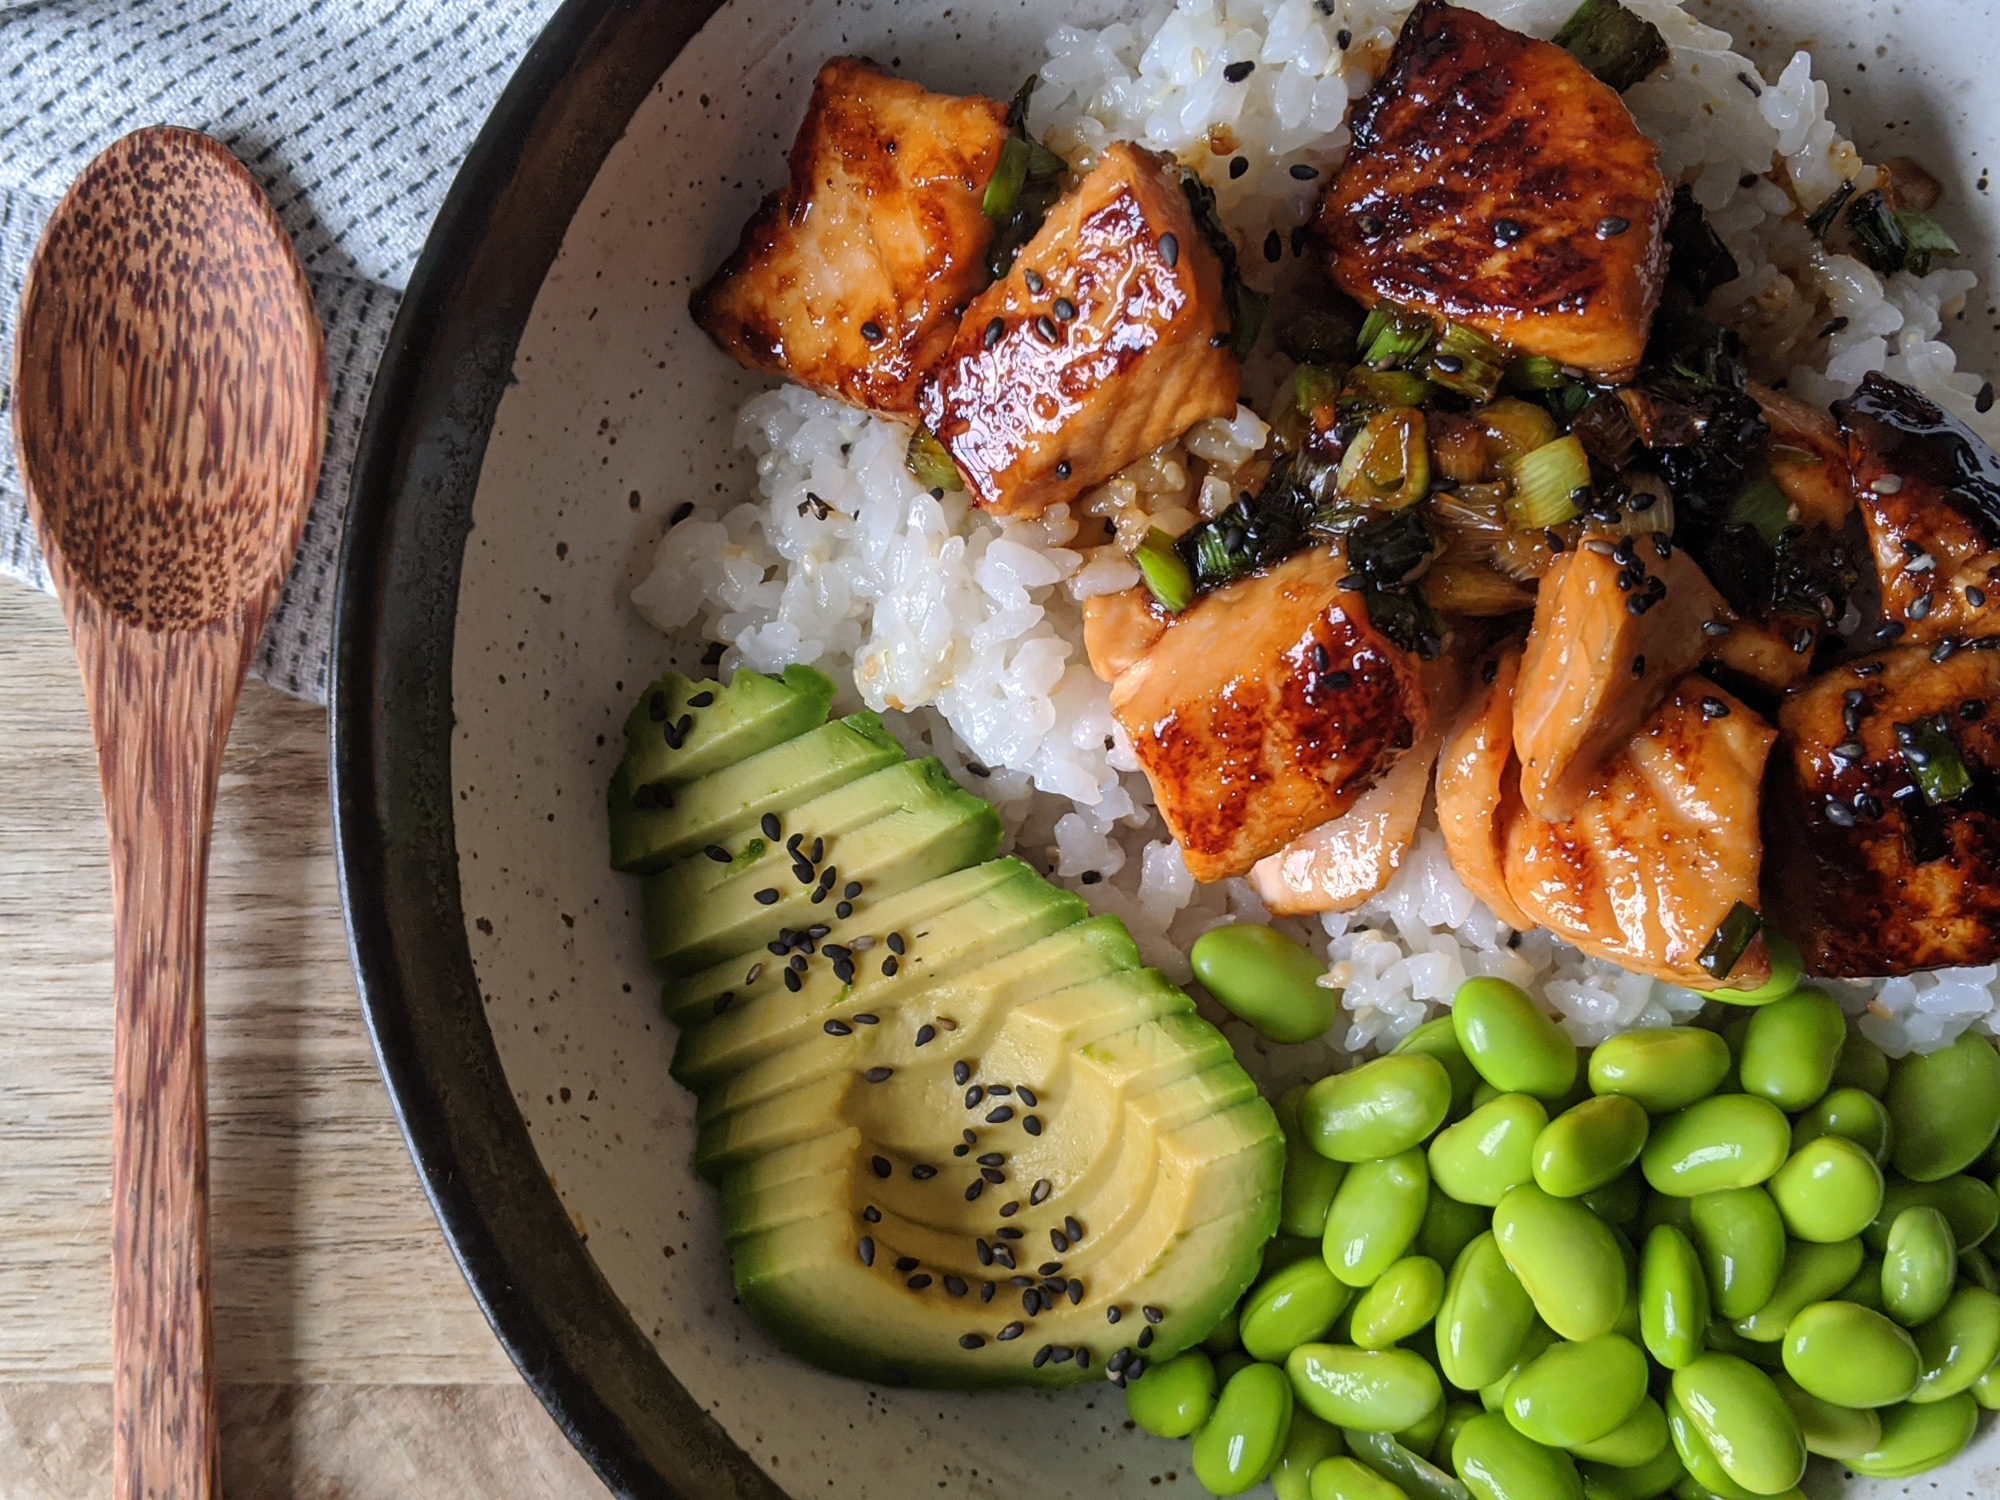 Sushi Rice Recipe - Whipped It Up